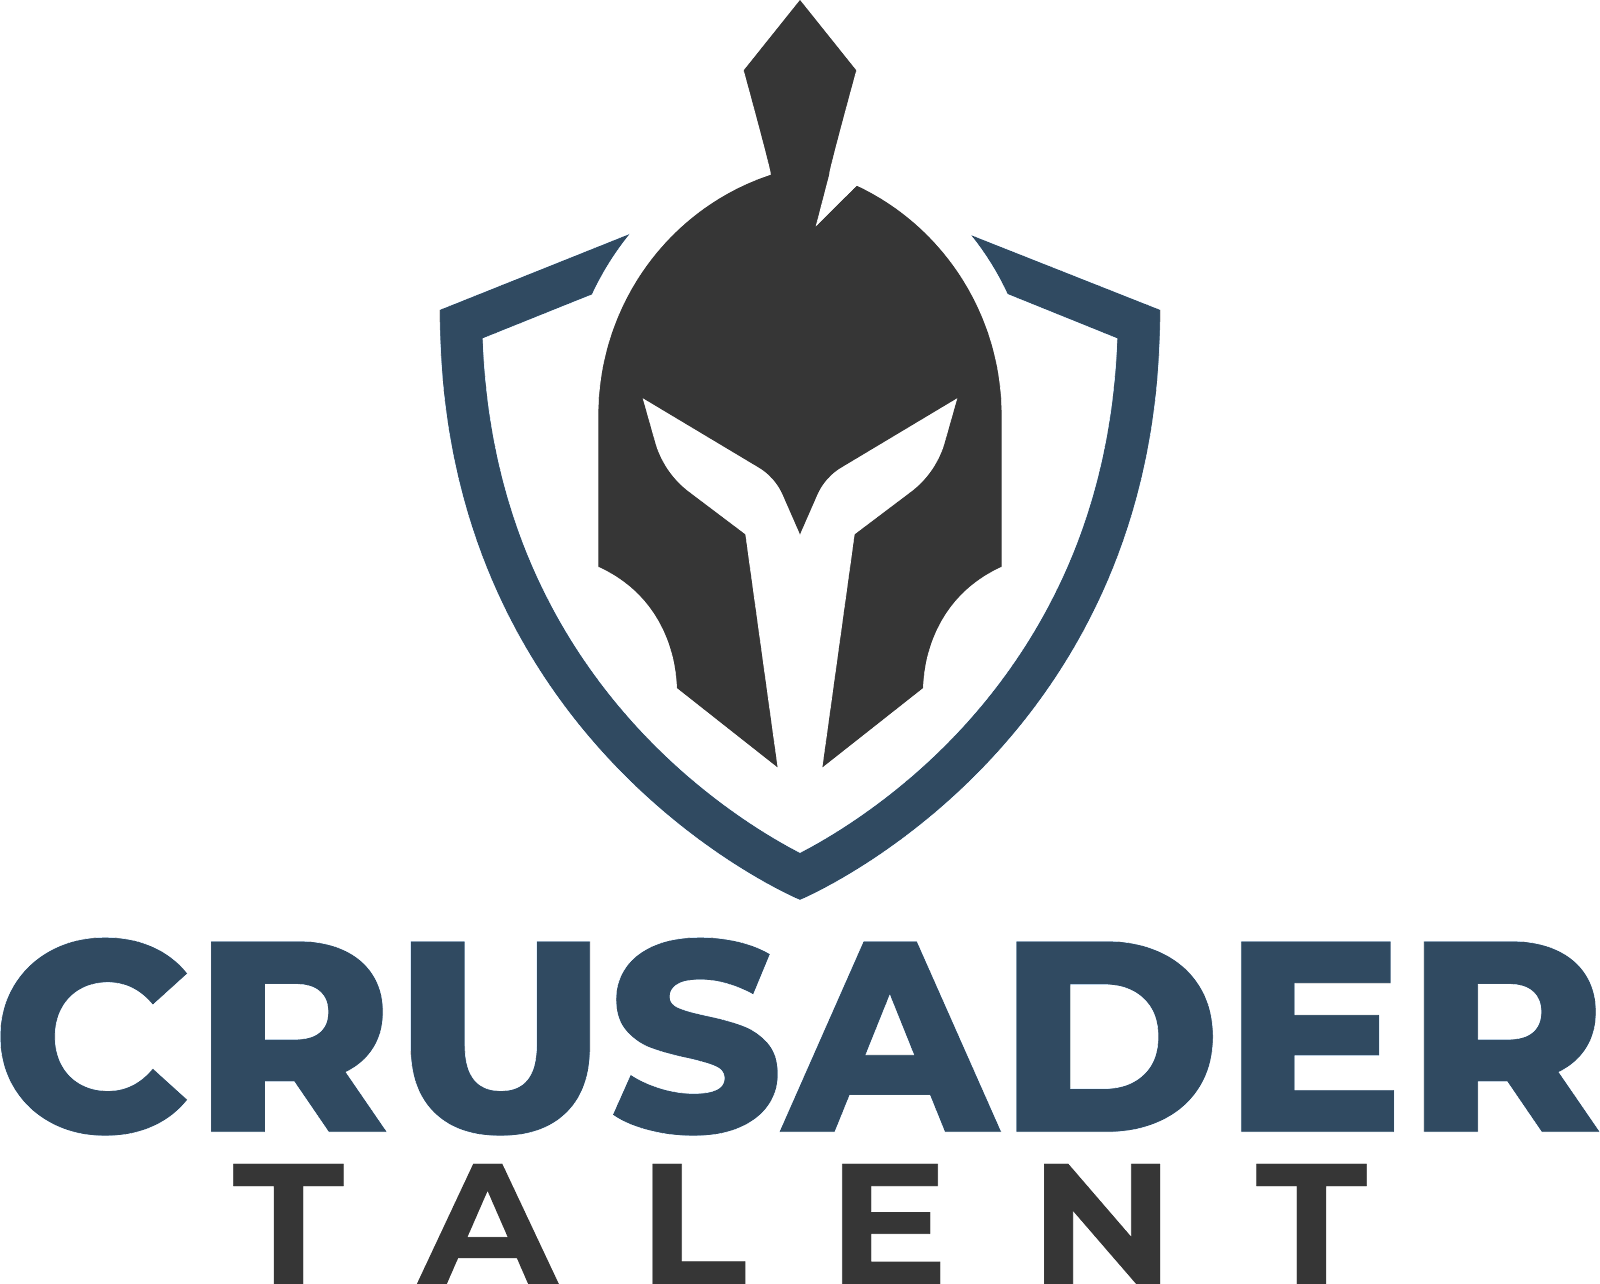 Crusader Talent Announces Landmark Partnership with Kick for Old School RuneScape Content Creators